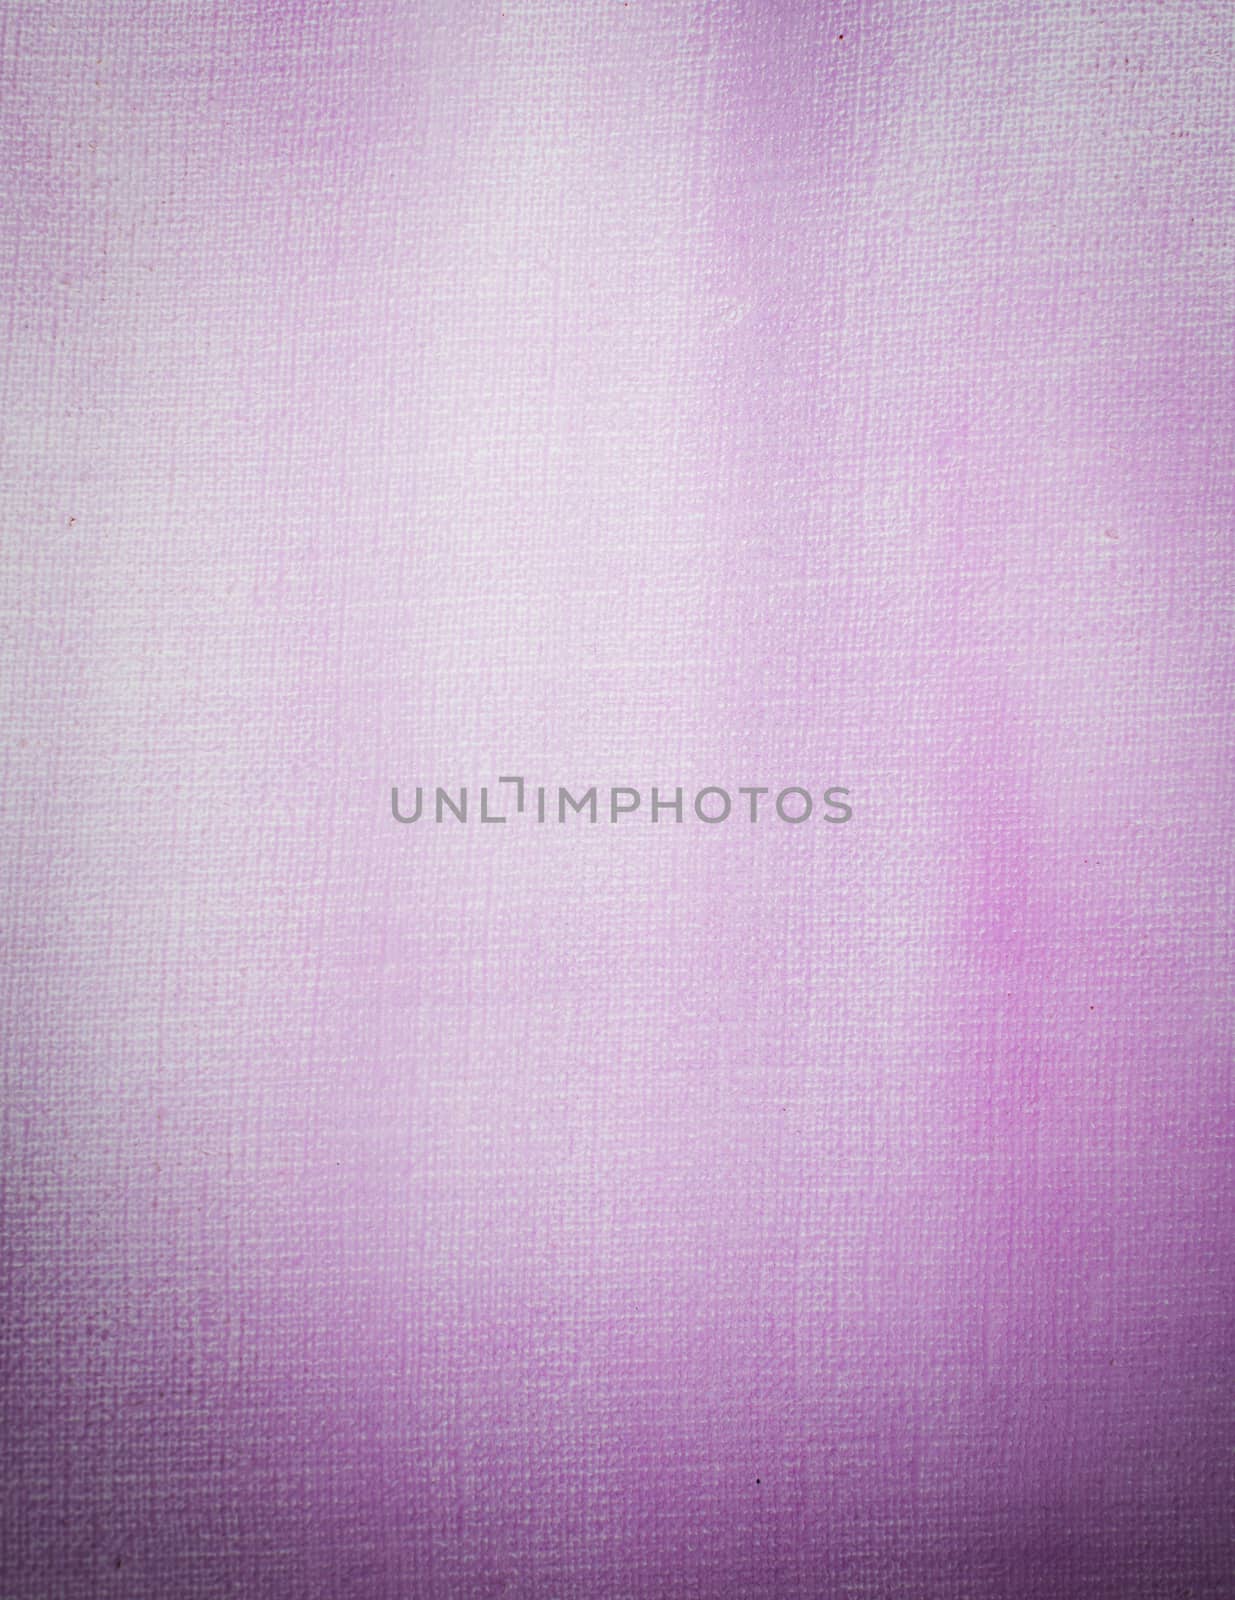 Light pink canvas for backdrop or background, vignette and vertical image.